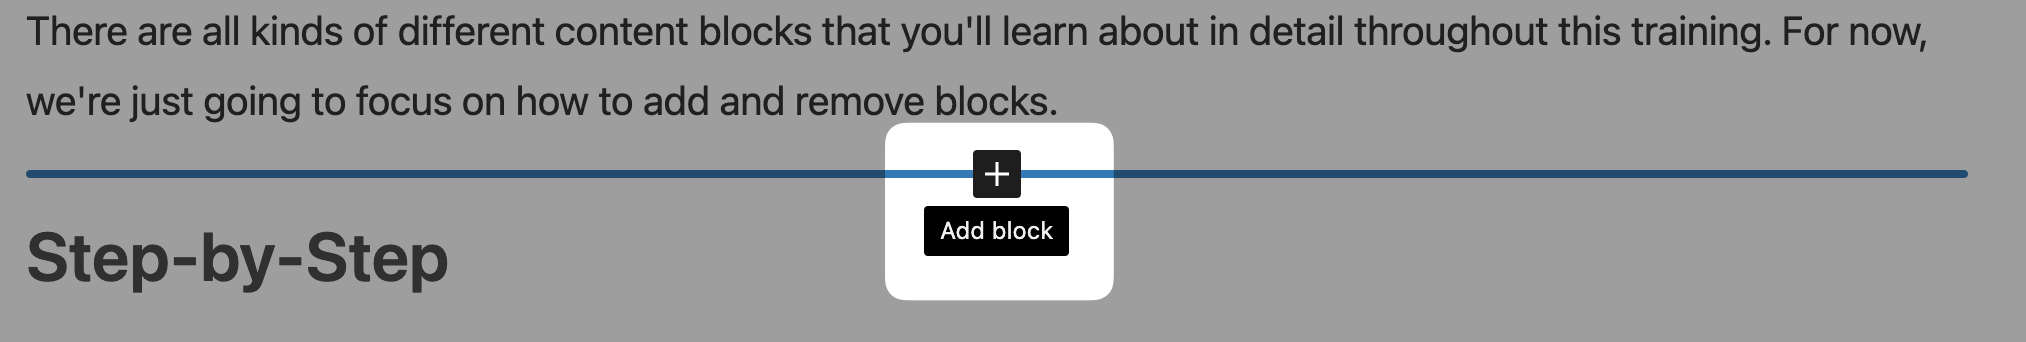 Add block icon between blocks